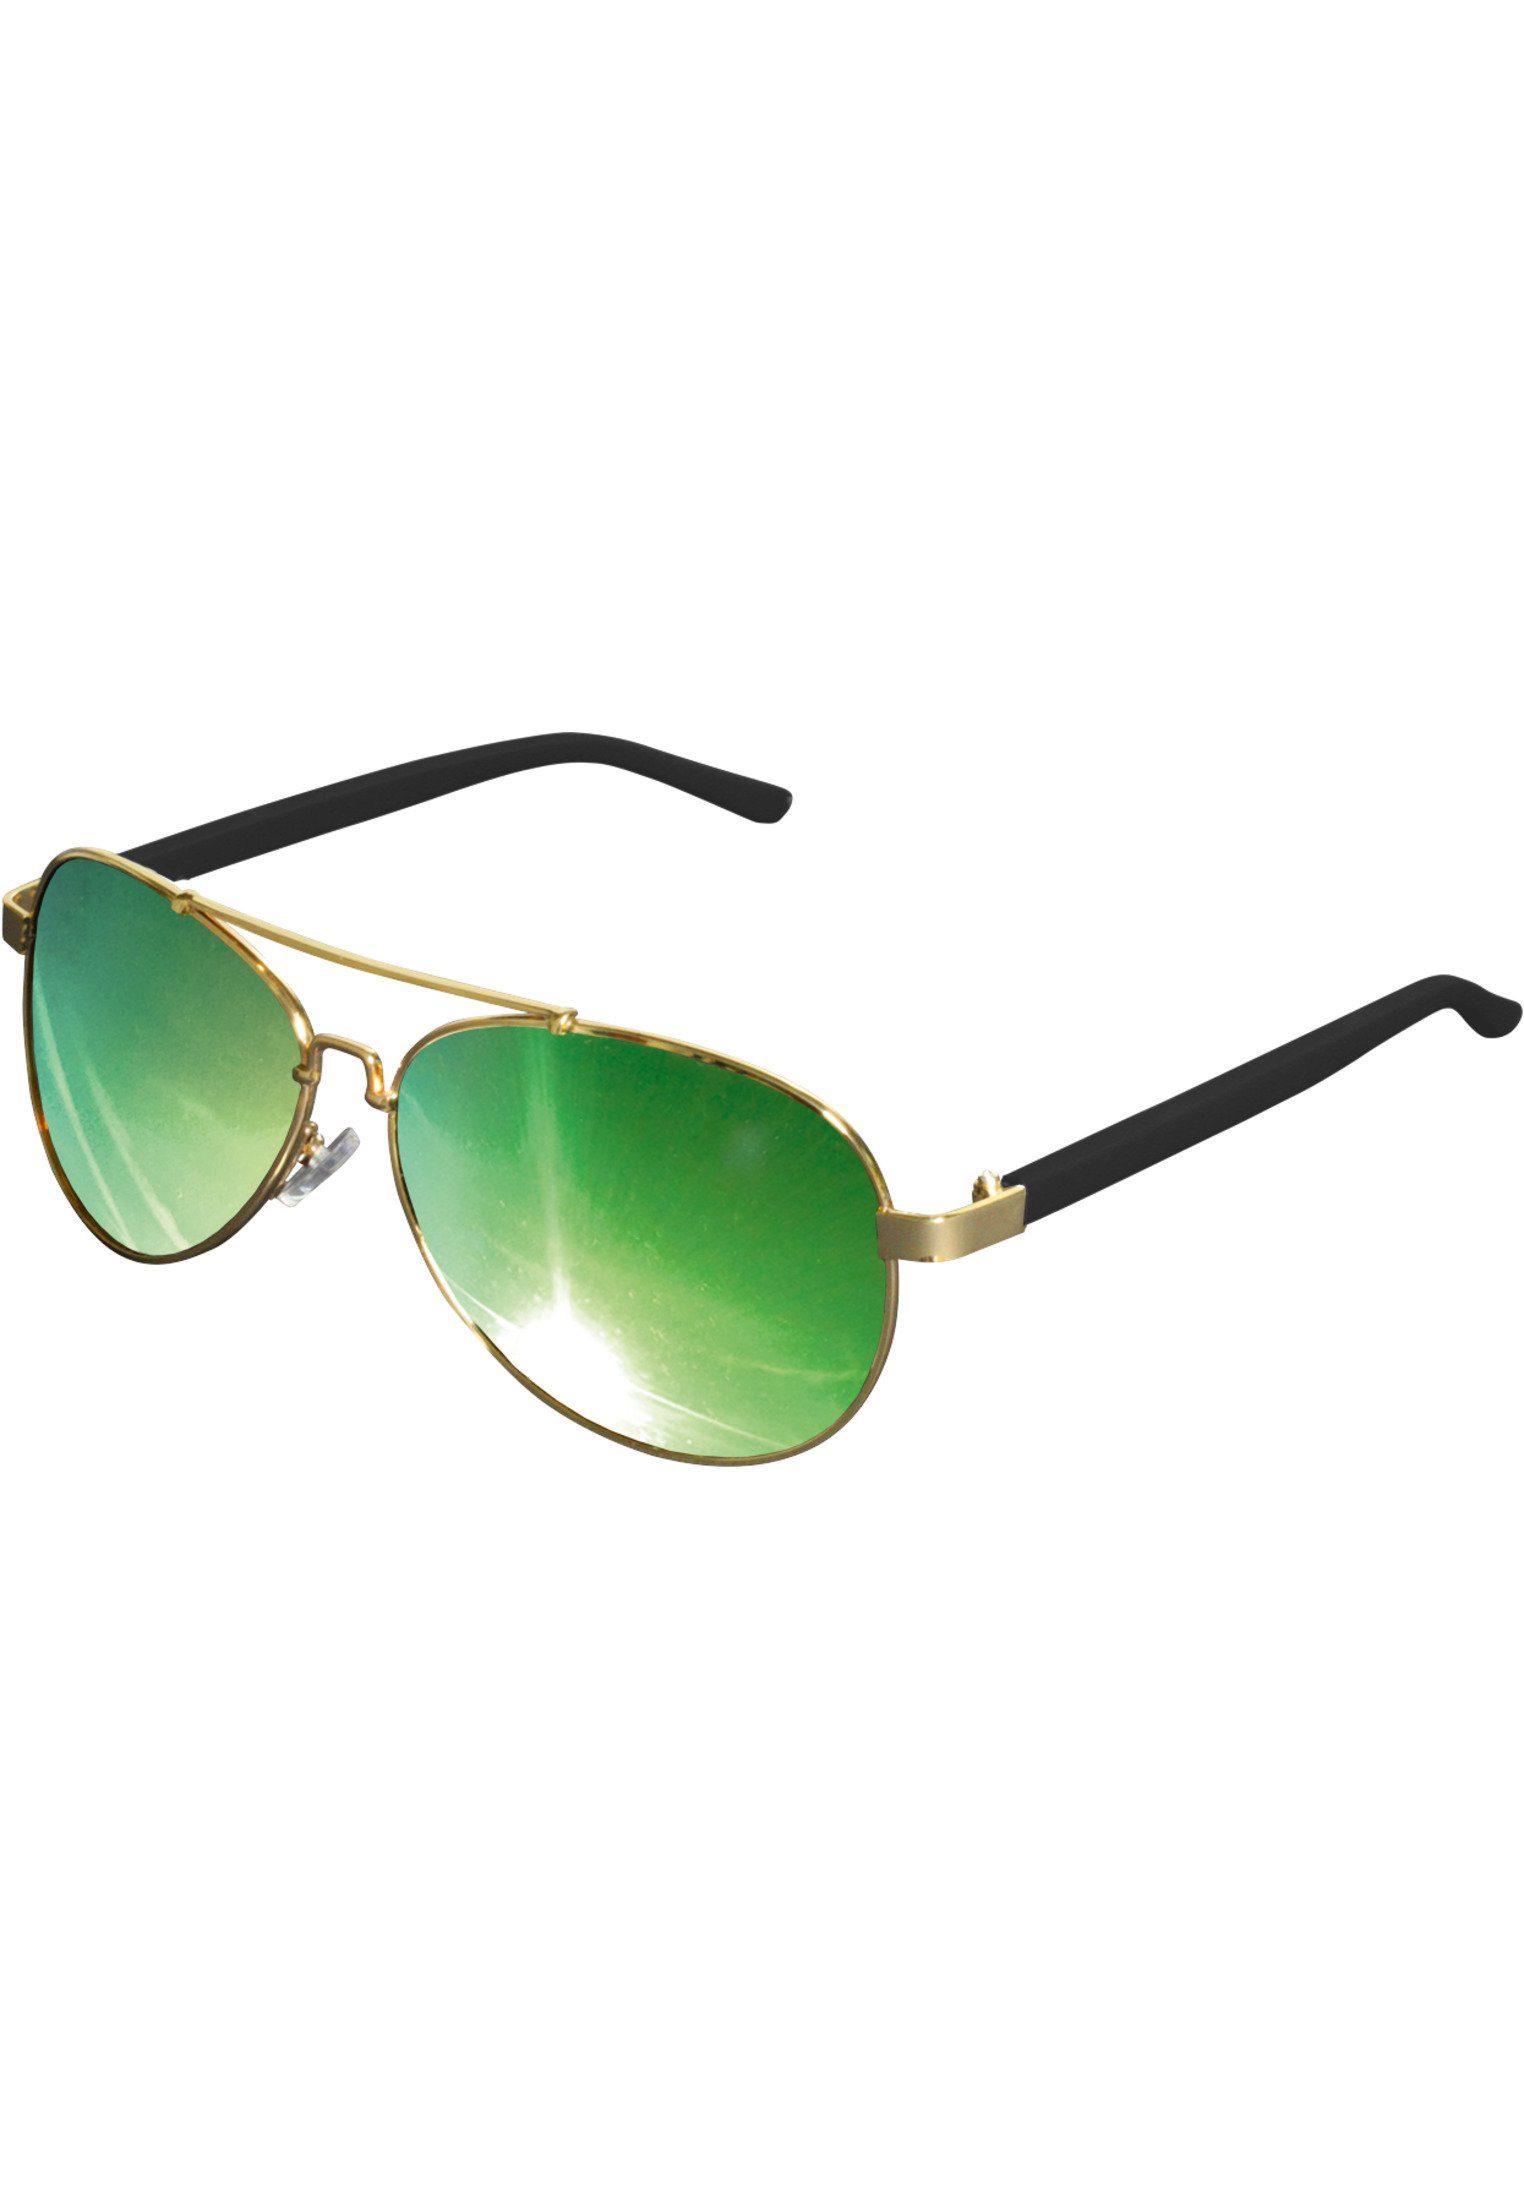 MSTRDS Sonnenbrille Accessoires Sunglasses Mumbo Mirror gold/green